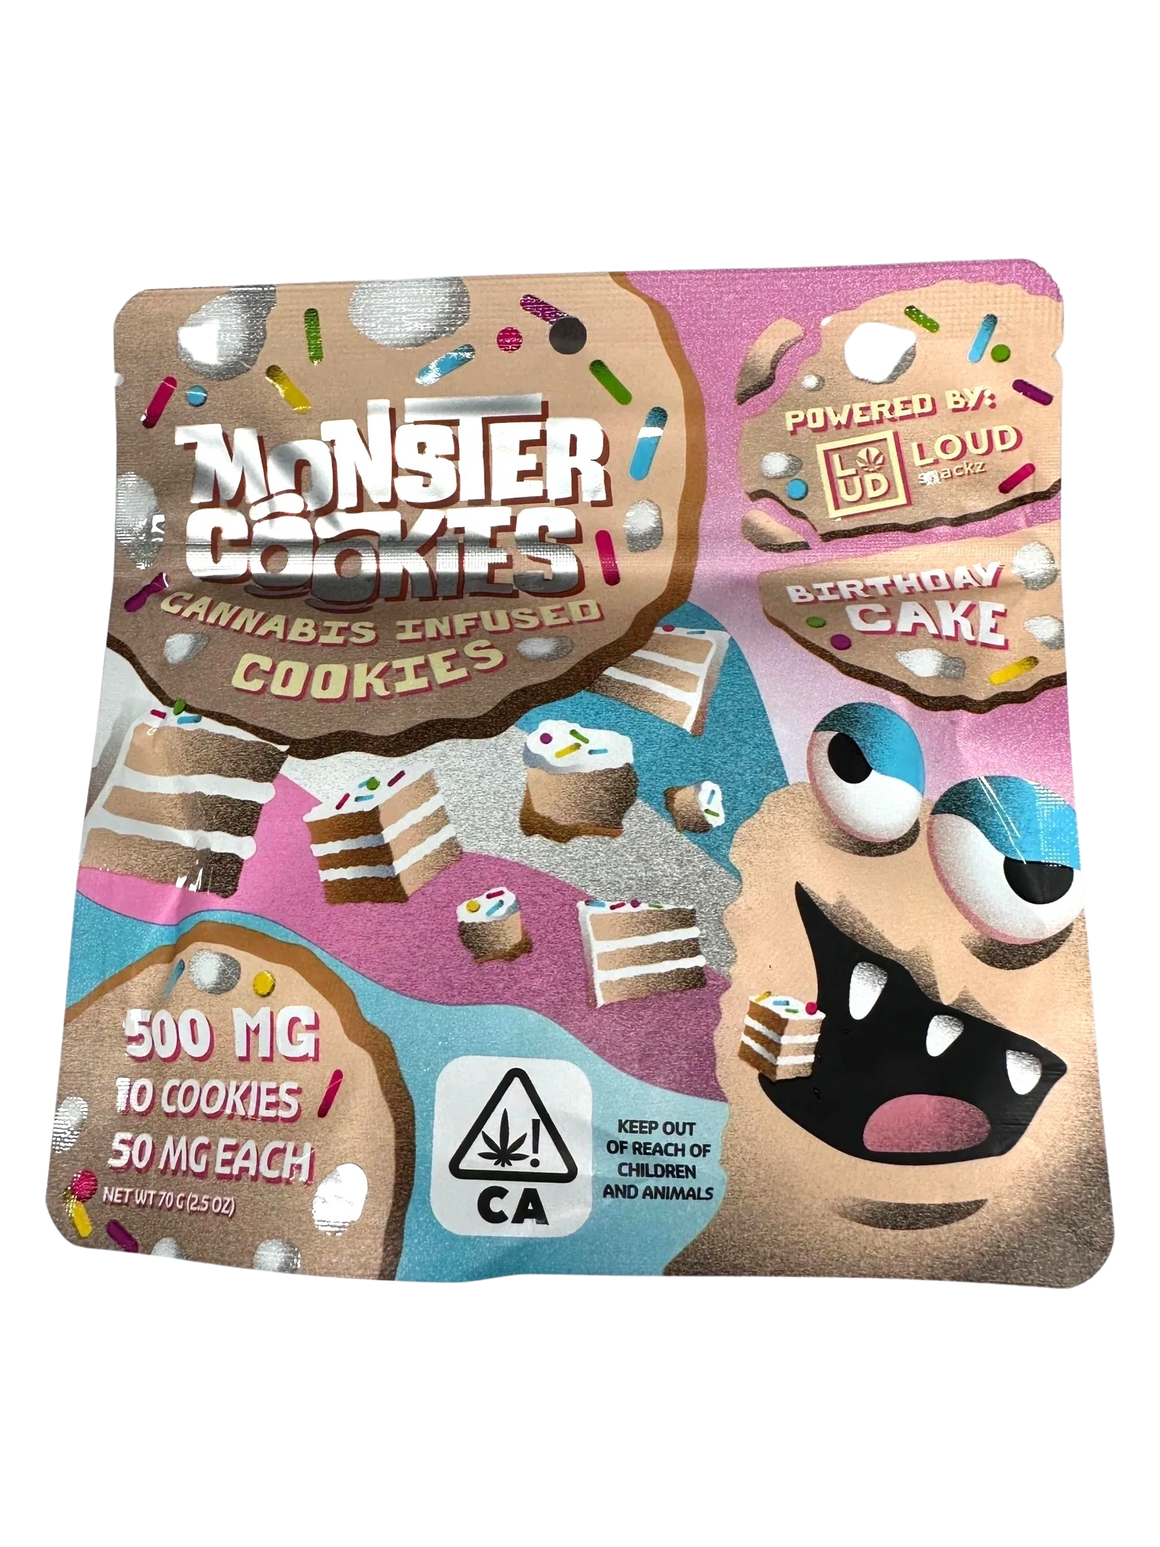 Monster Cookies ( Birthday Cake )